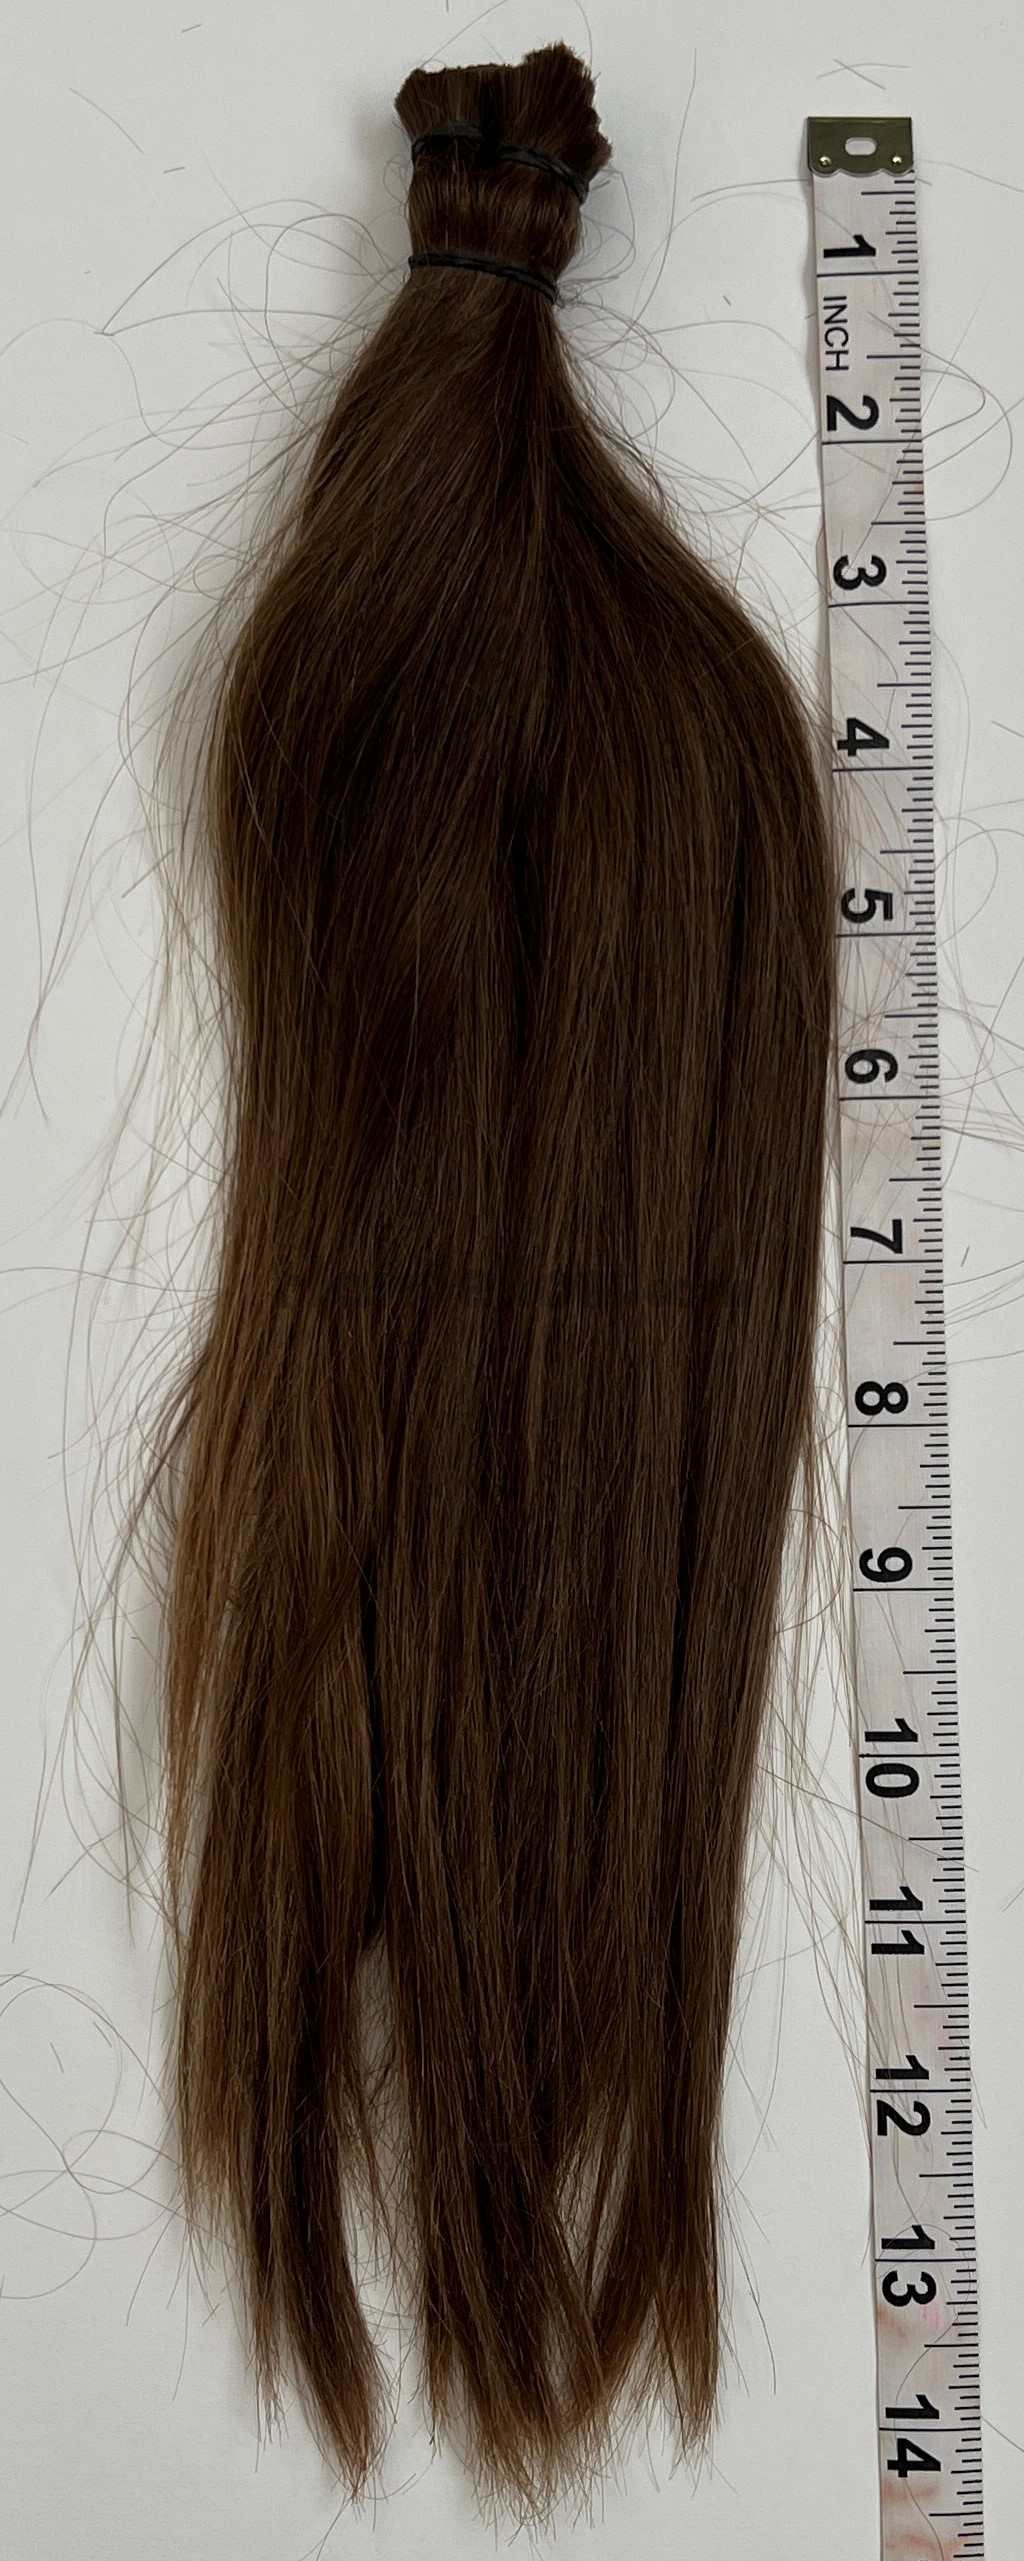 2023-0131 Hair06